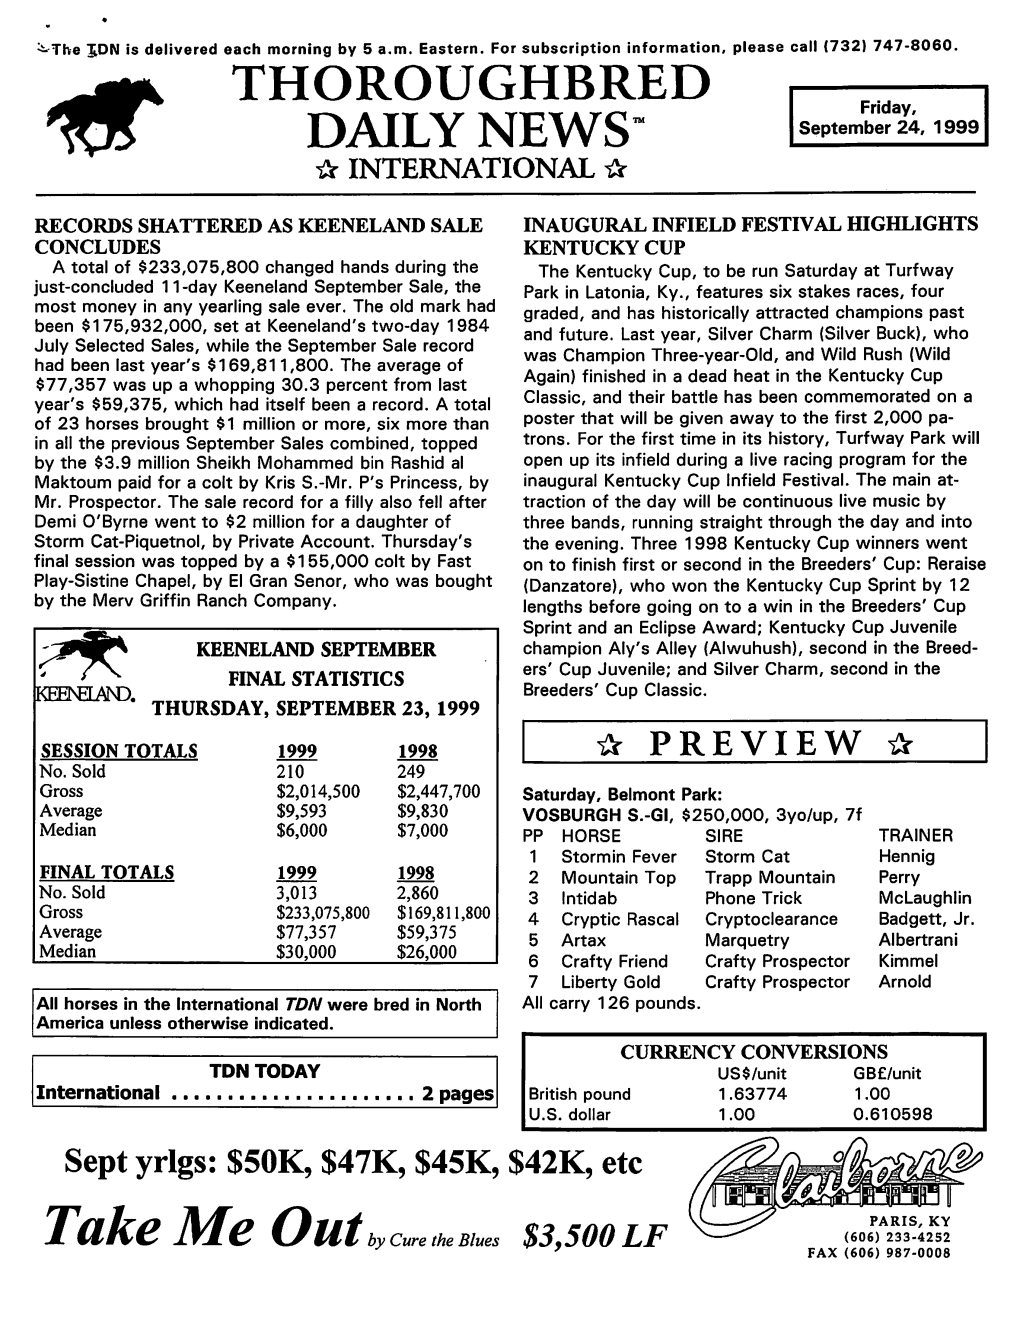 Icr DAILY NEWS- September 24, 1999 INTERNATIONAL H